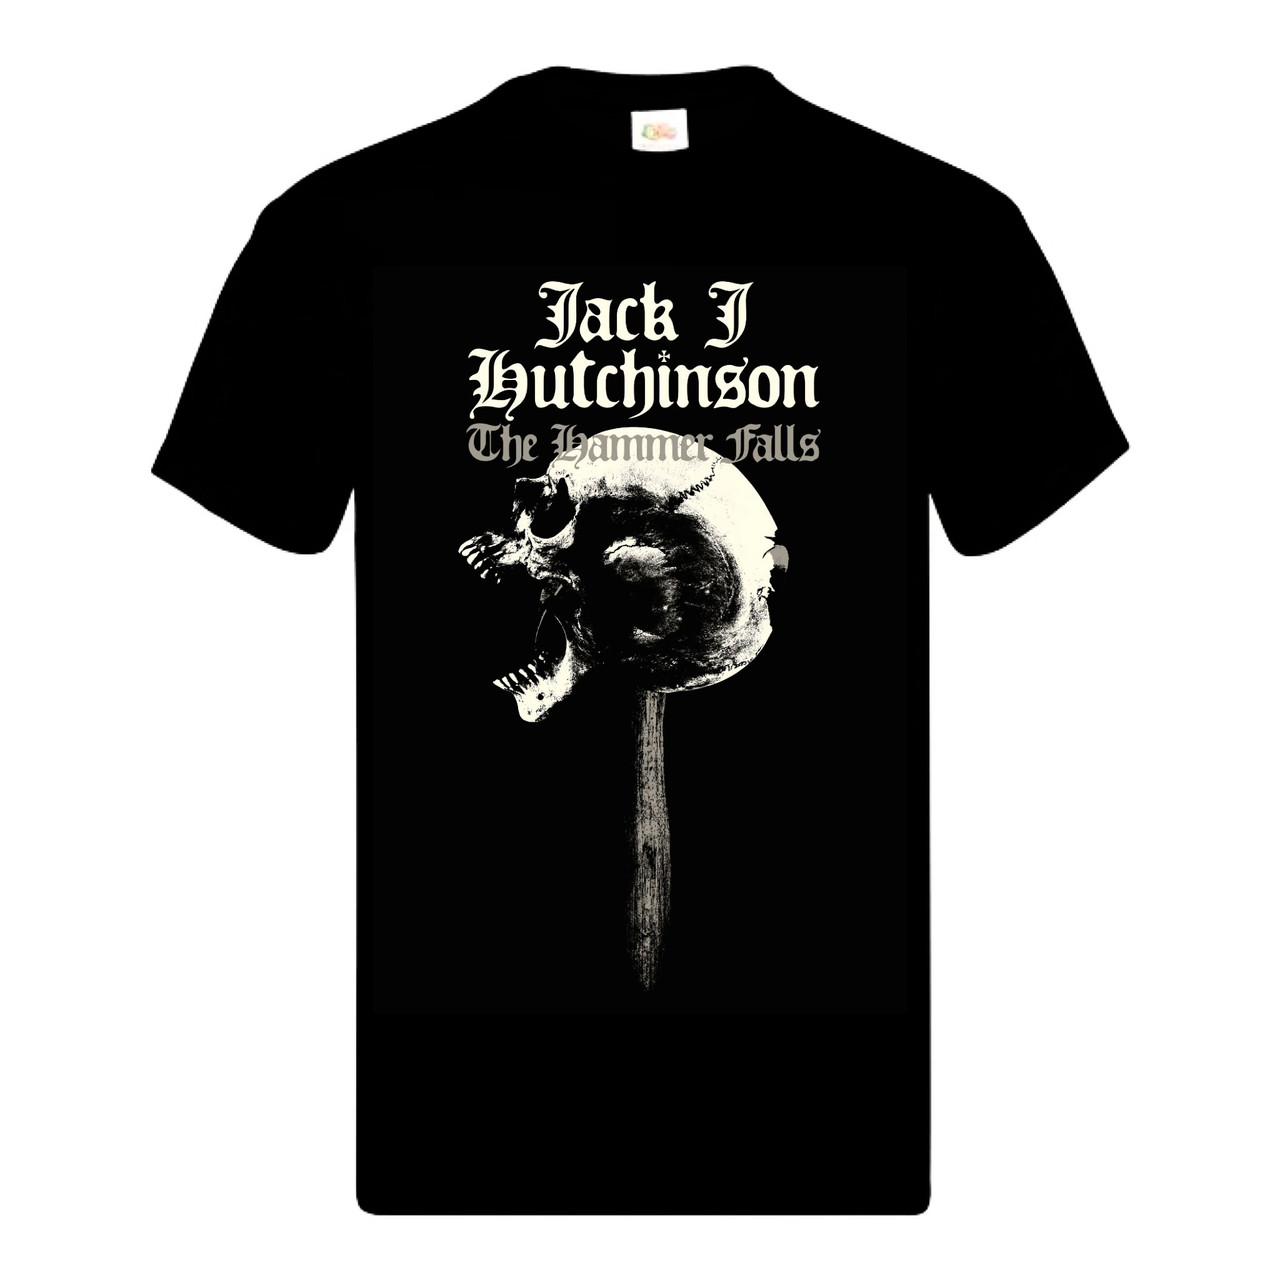 Jack J Hutchinson 'The Hammer Falls' (Black) T-Shirt